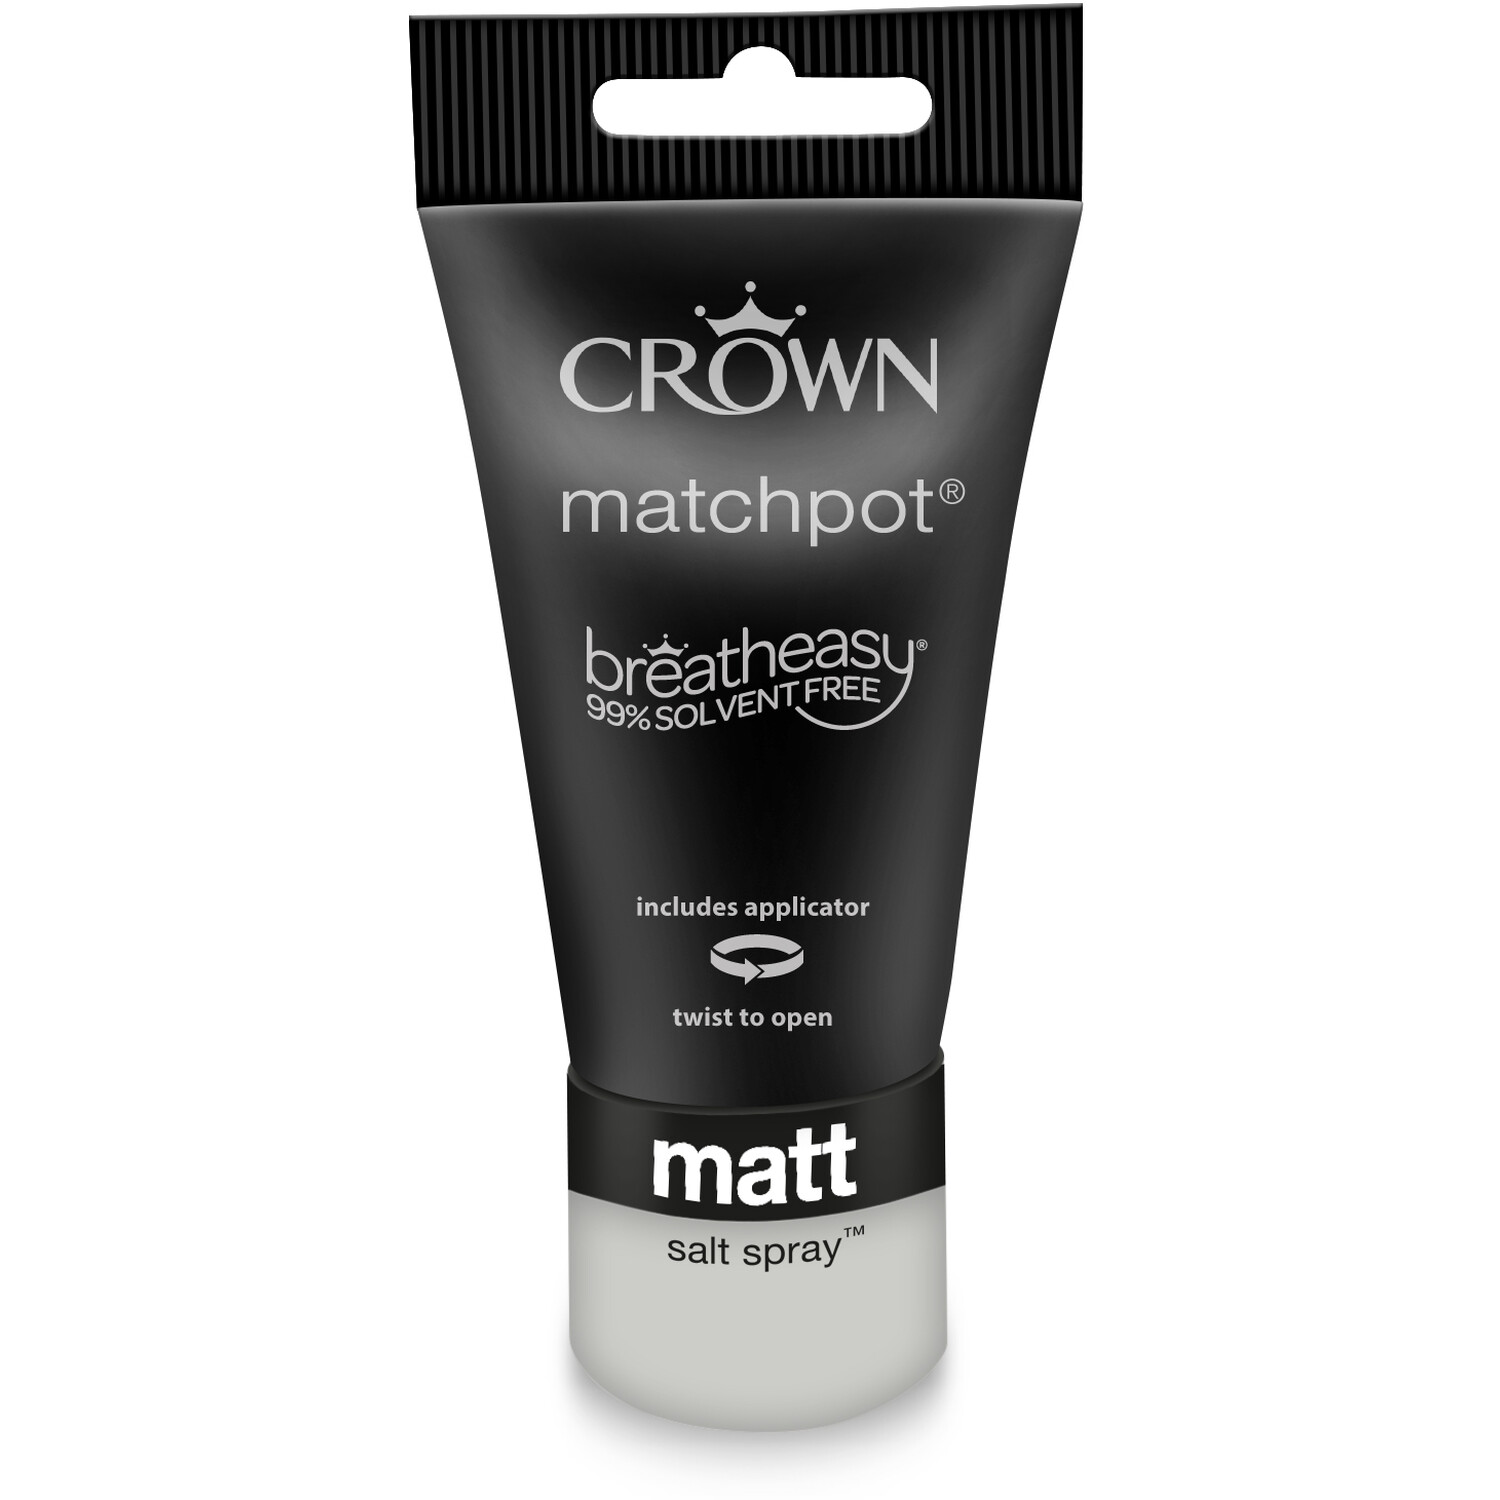 Crown Breatheasy Salt Spray Matt Feature Wall Tester Pot 40ml Image